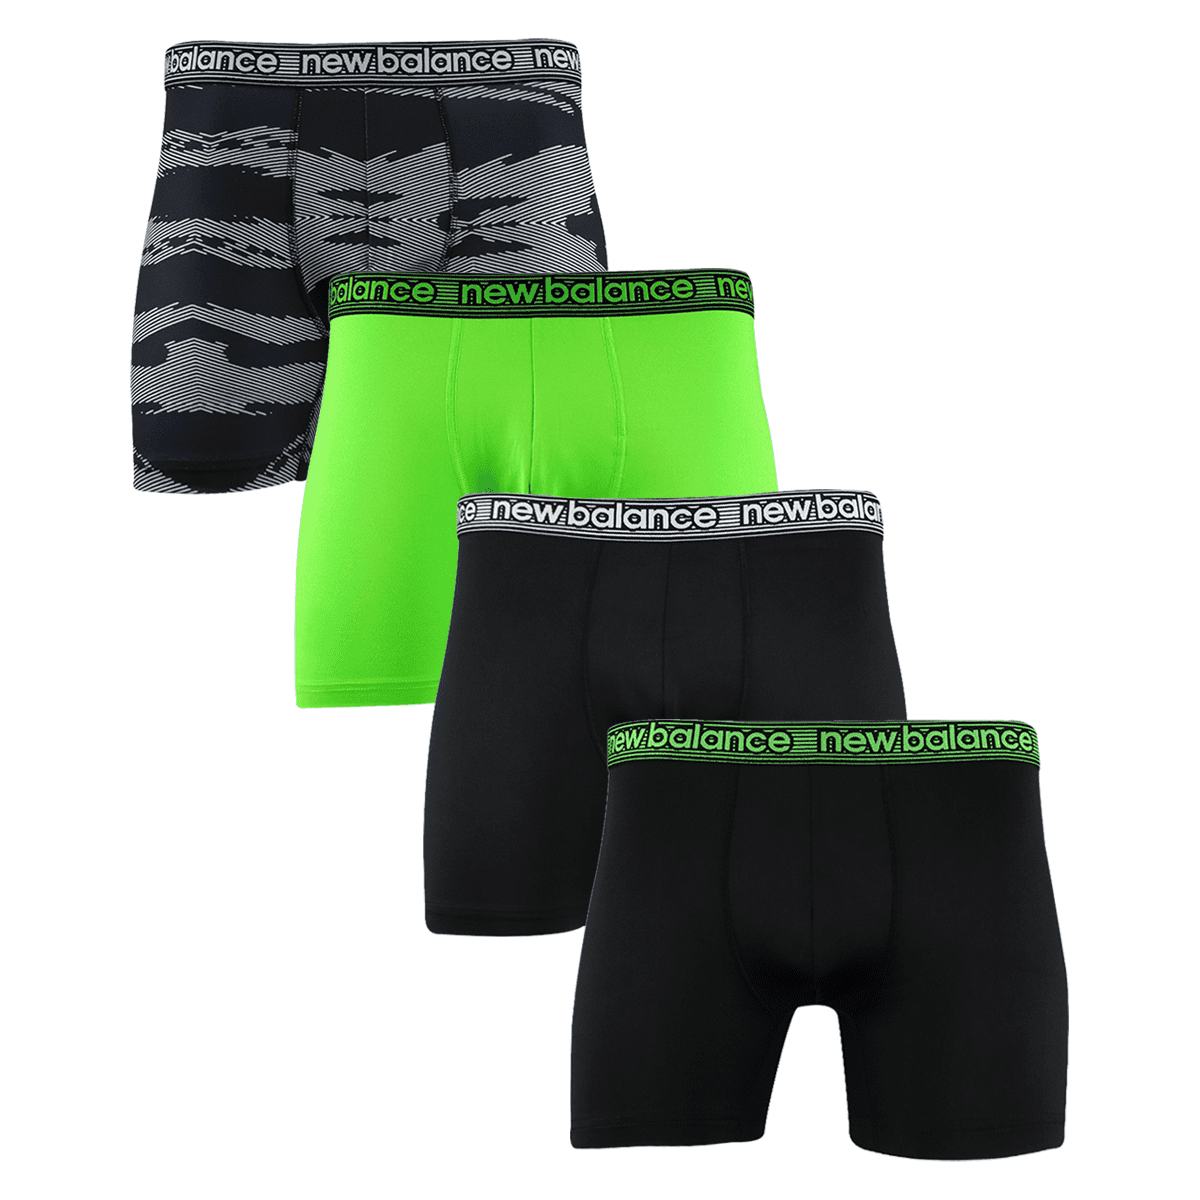 Sceptisch Contour overhemd New Balance Men's Black, Neon Green, Striped Pattern 4 Pack Boxer Brief  (S03) | Walmart Canada